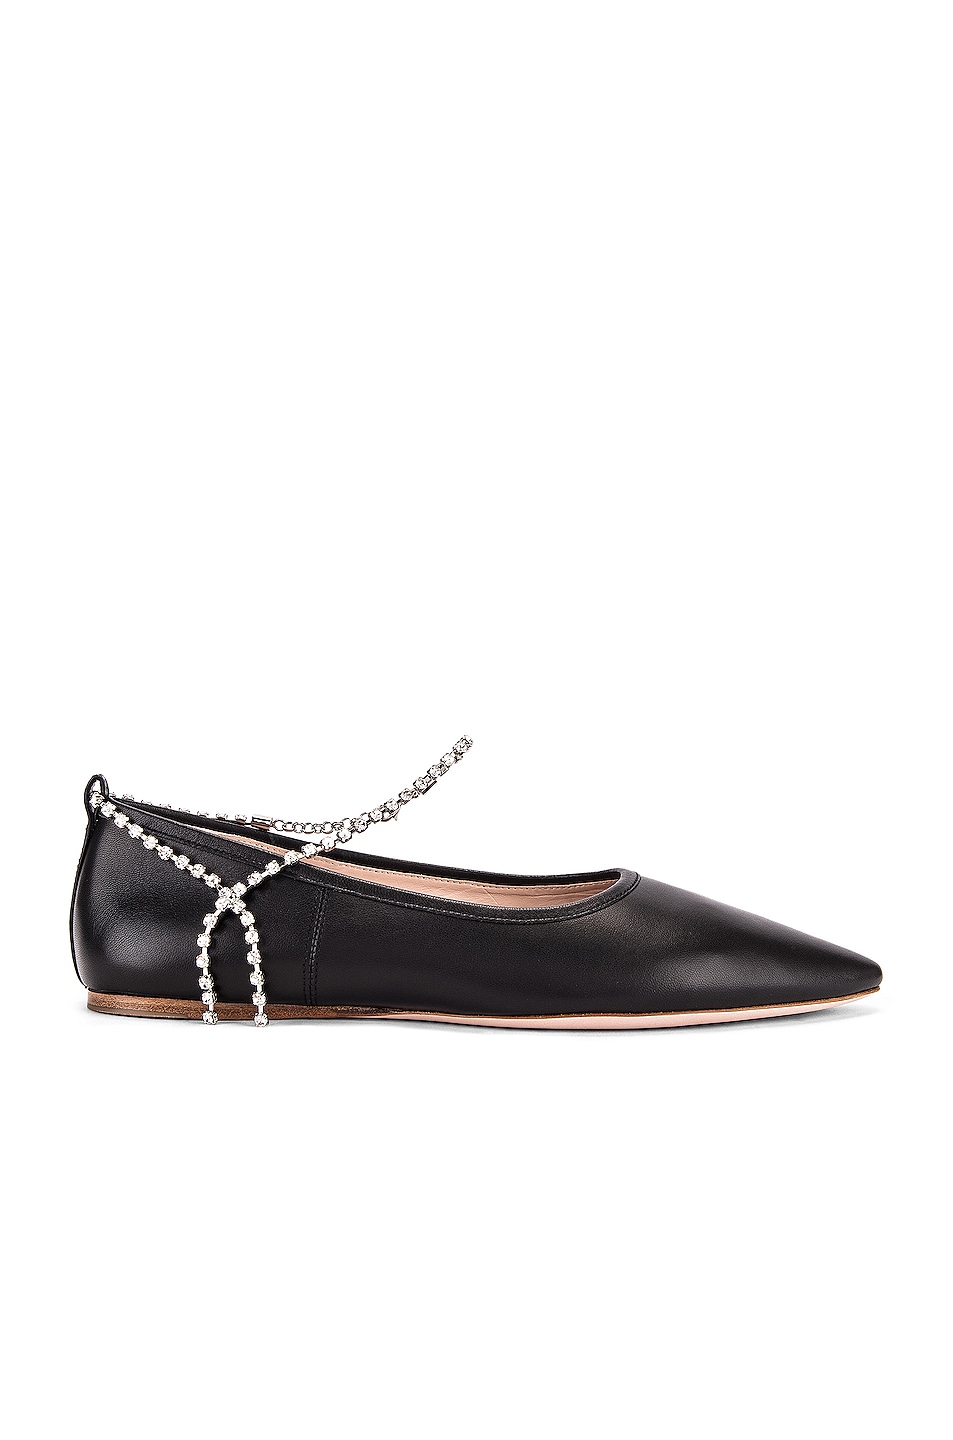 Image 1 of Miu Miu Leather Ankle Jewel Flats in Black